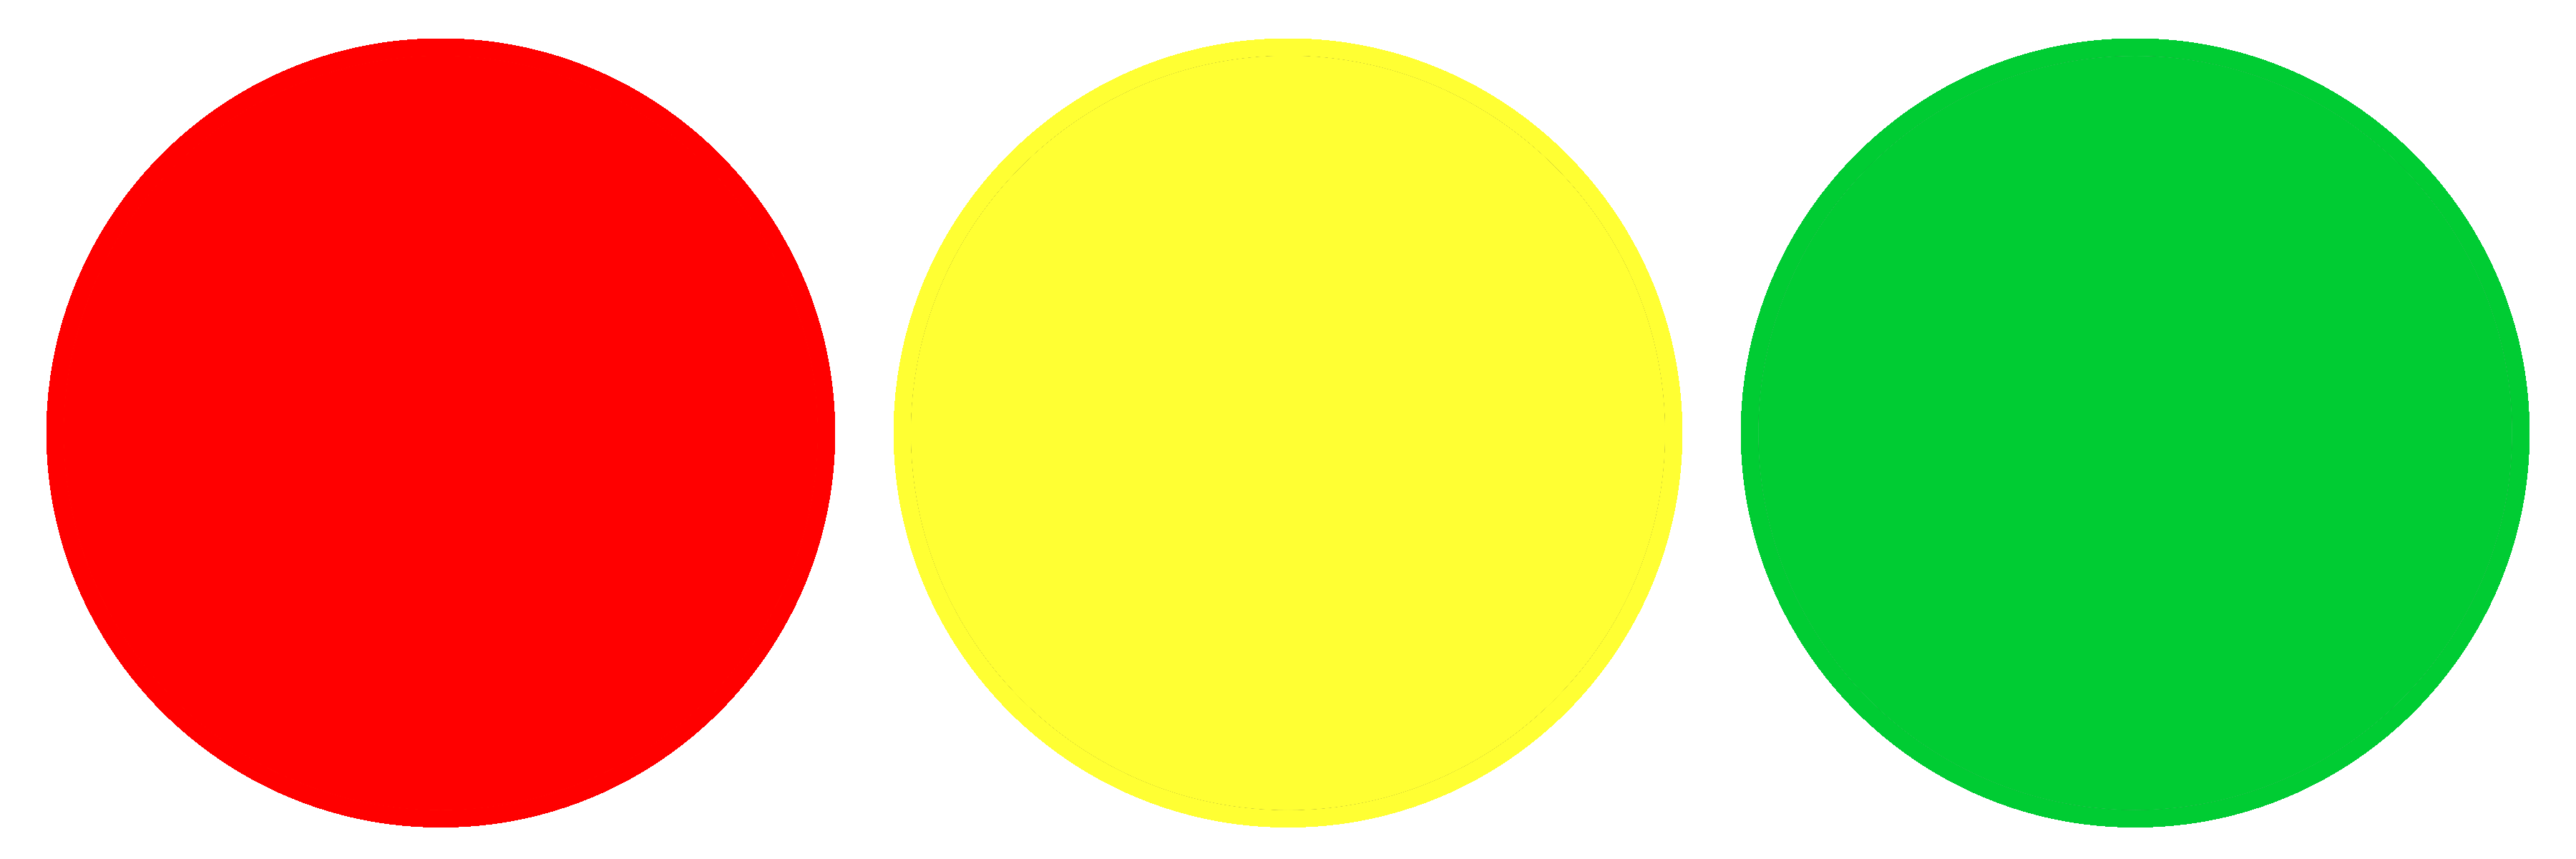 Red Yellow Green Blue Circle Logo Kopi Anget